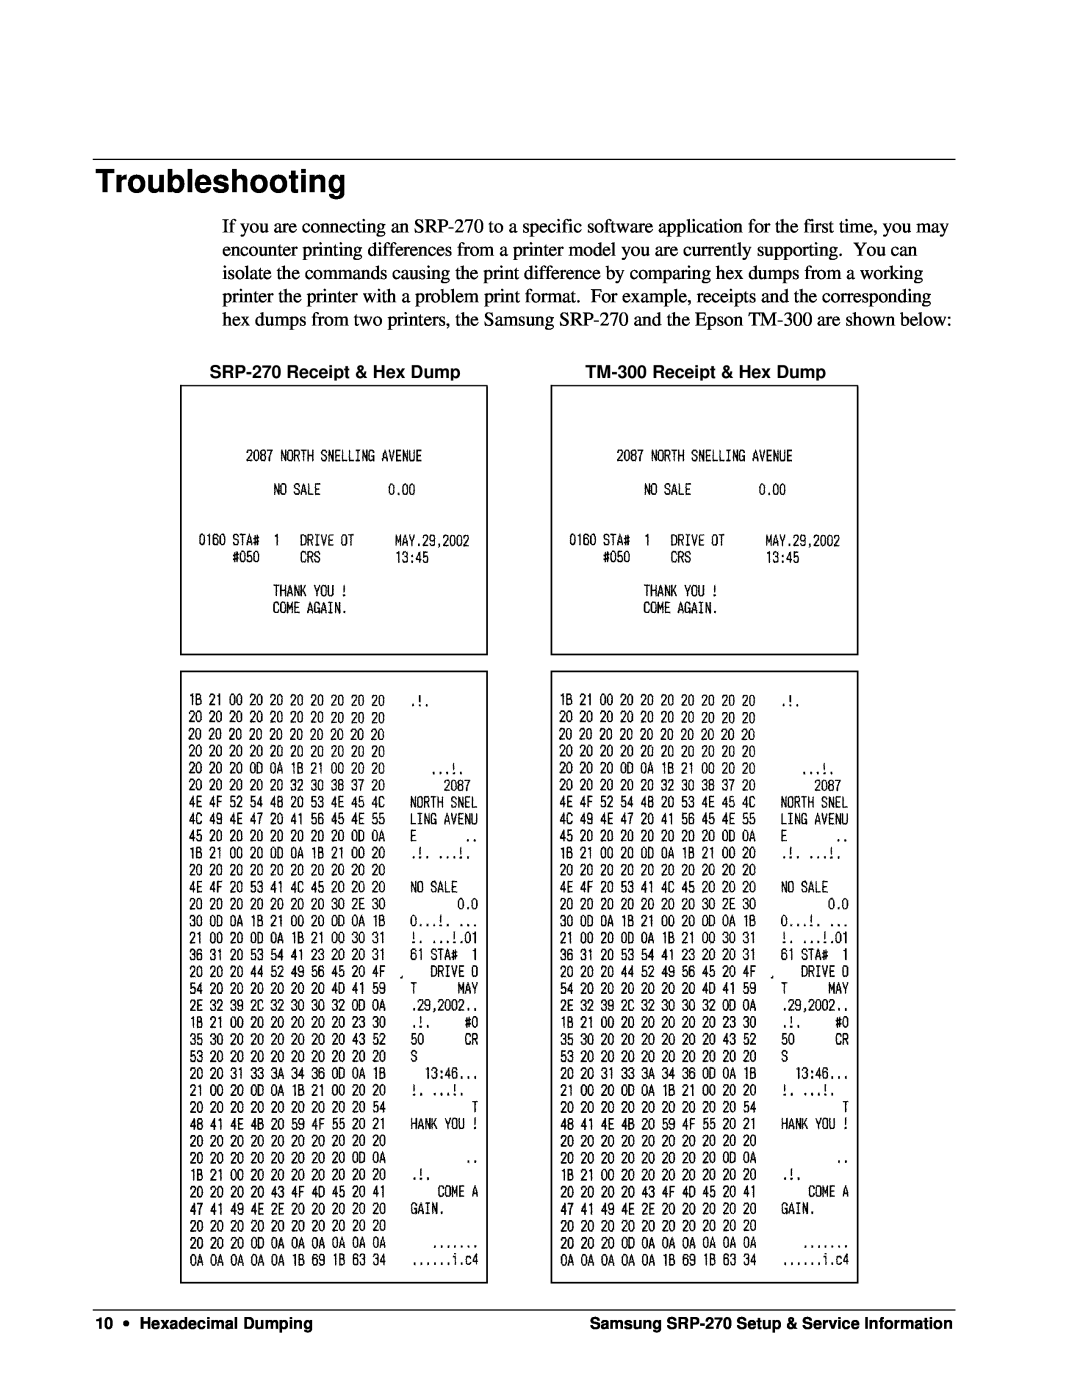 Samsung specifications Troubleshooting, SRP-270 Receipt & Hex Dump, TM-300 Receipt & Hex Dump 